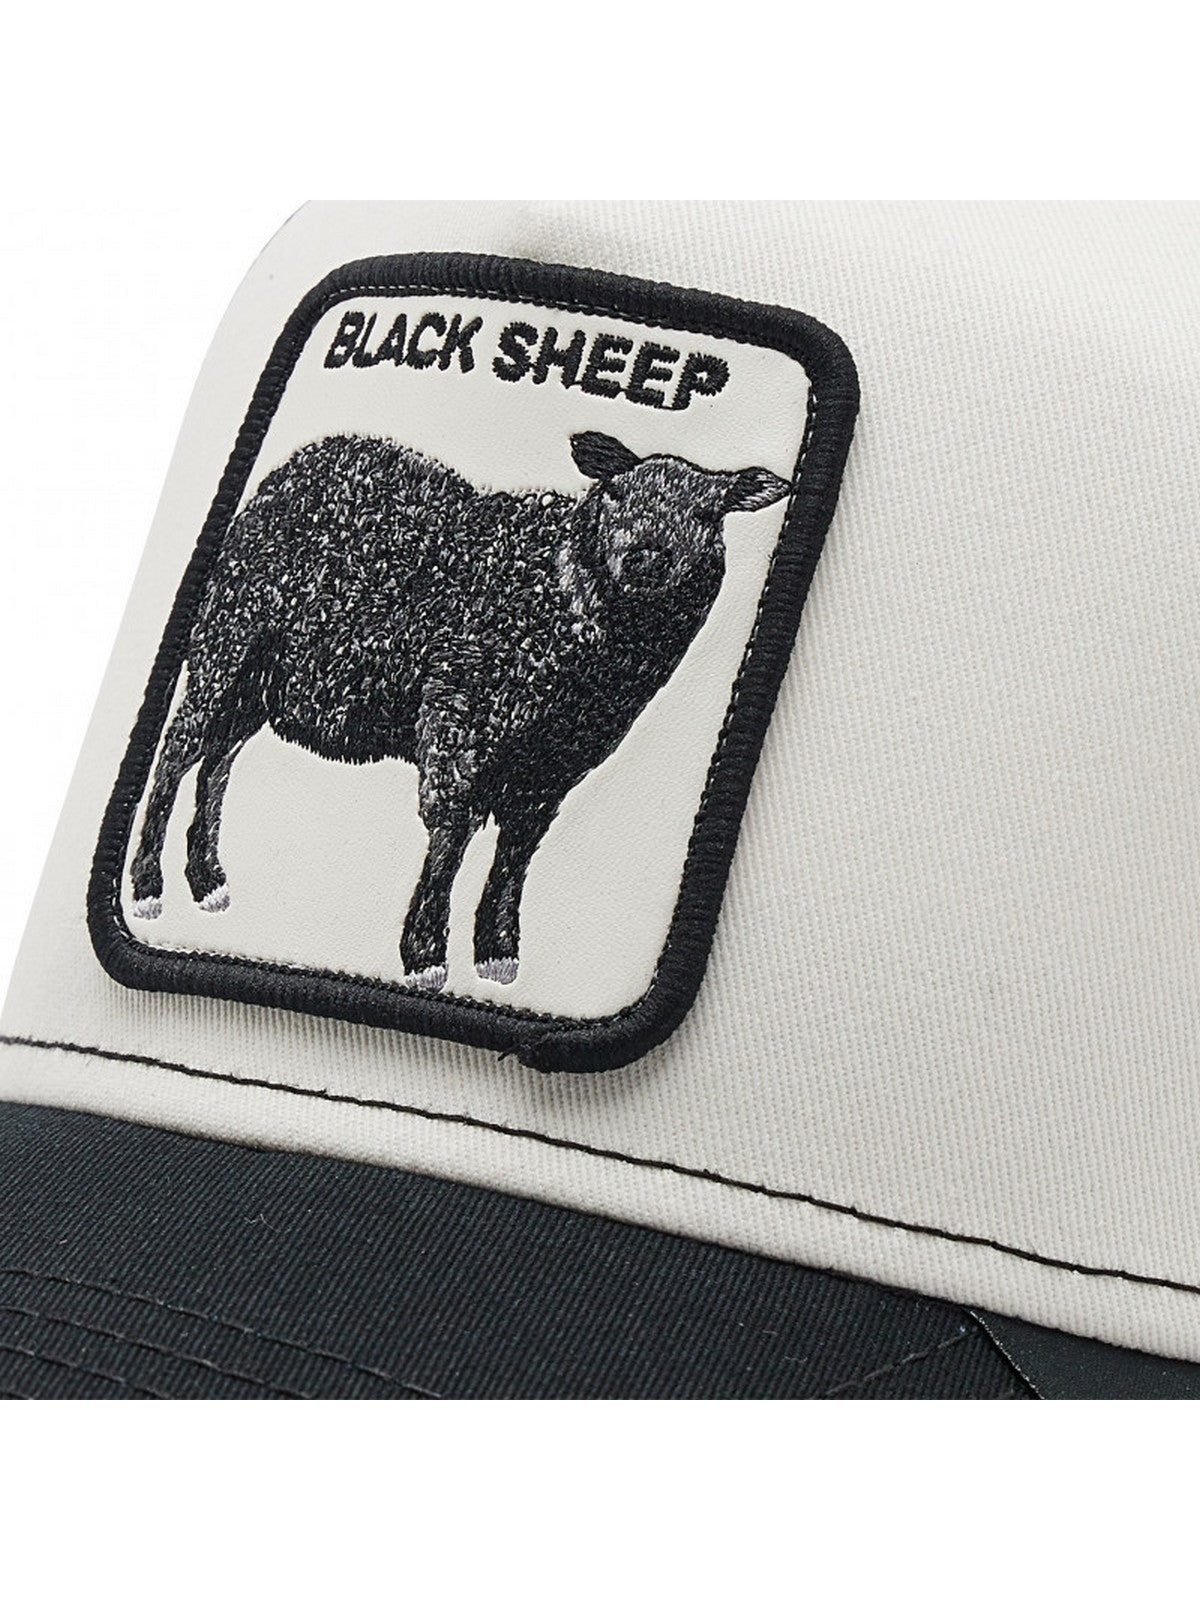 GOORIN BROS Cappello Uomo The black sheep 101-0380-WHI Bianco